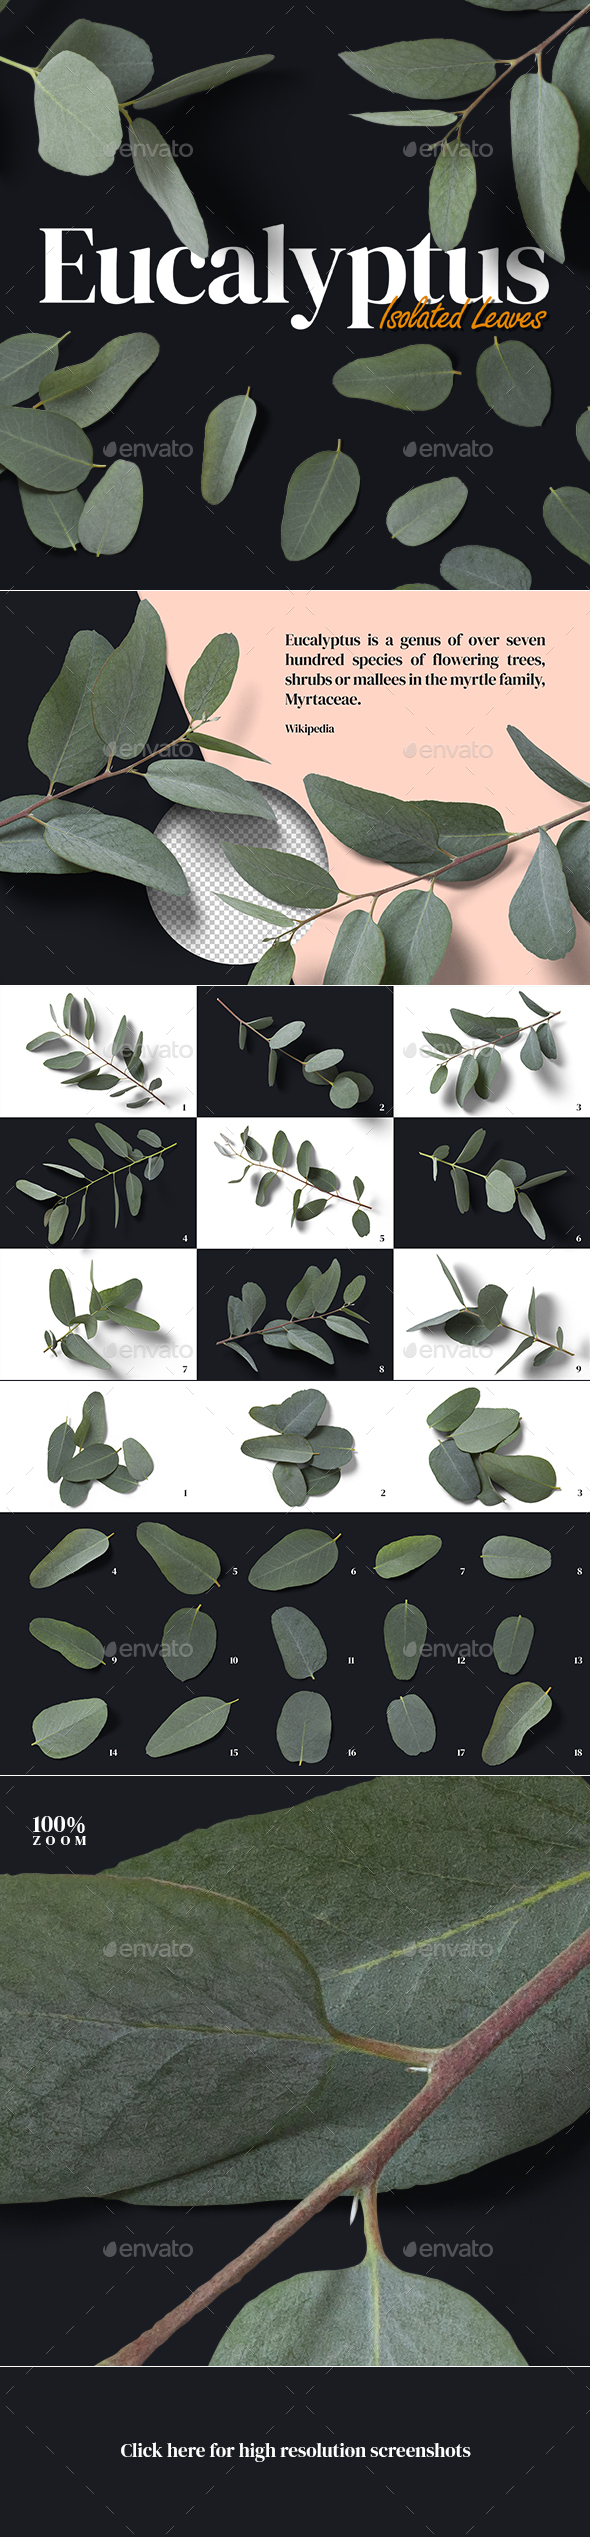 Isolated Eucalyptus Leaves